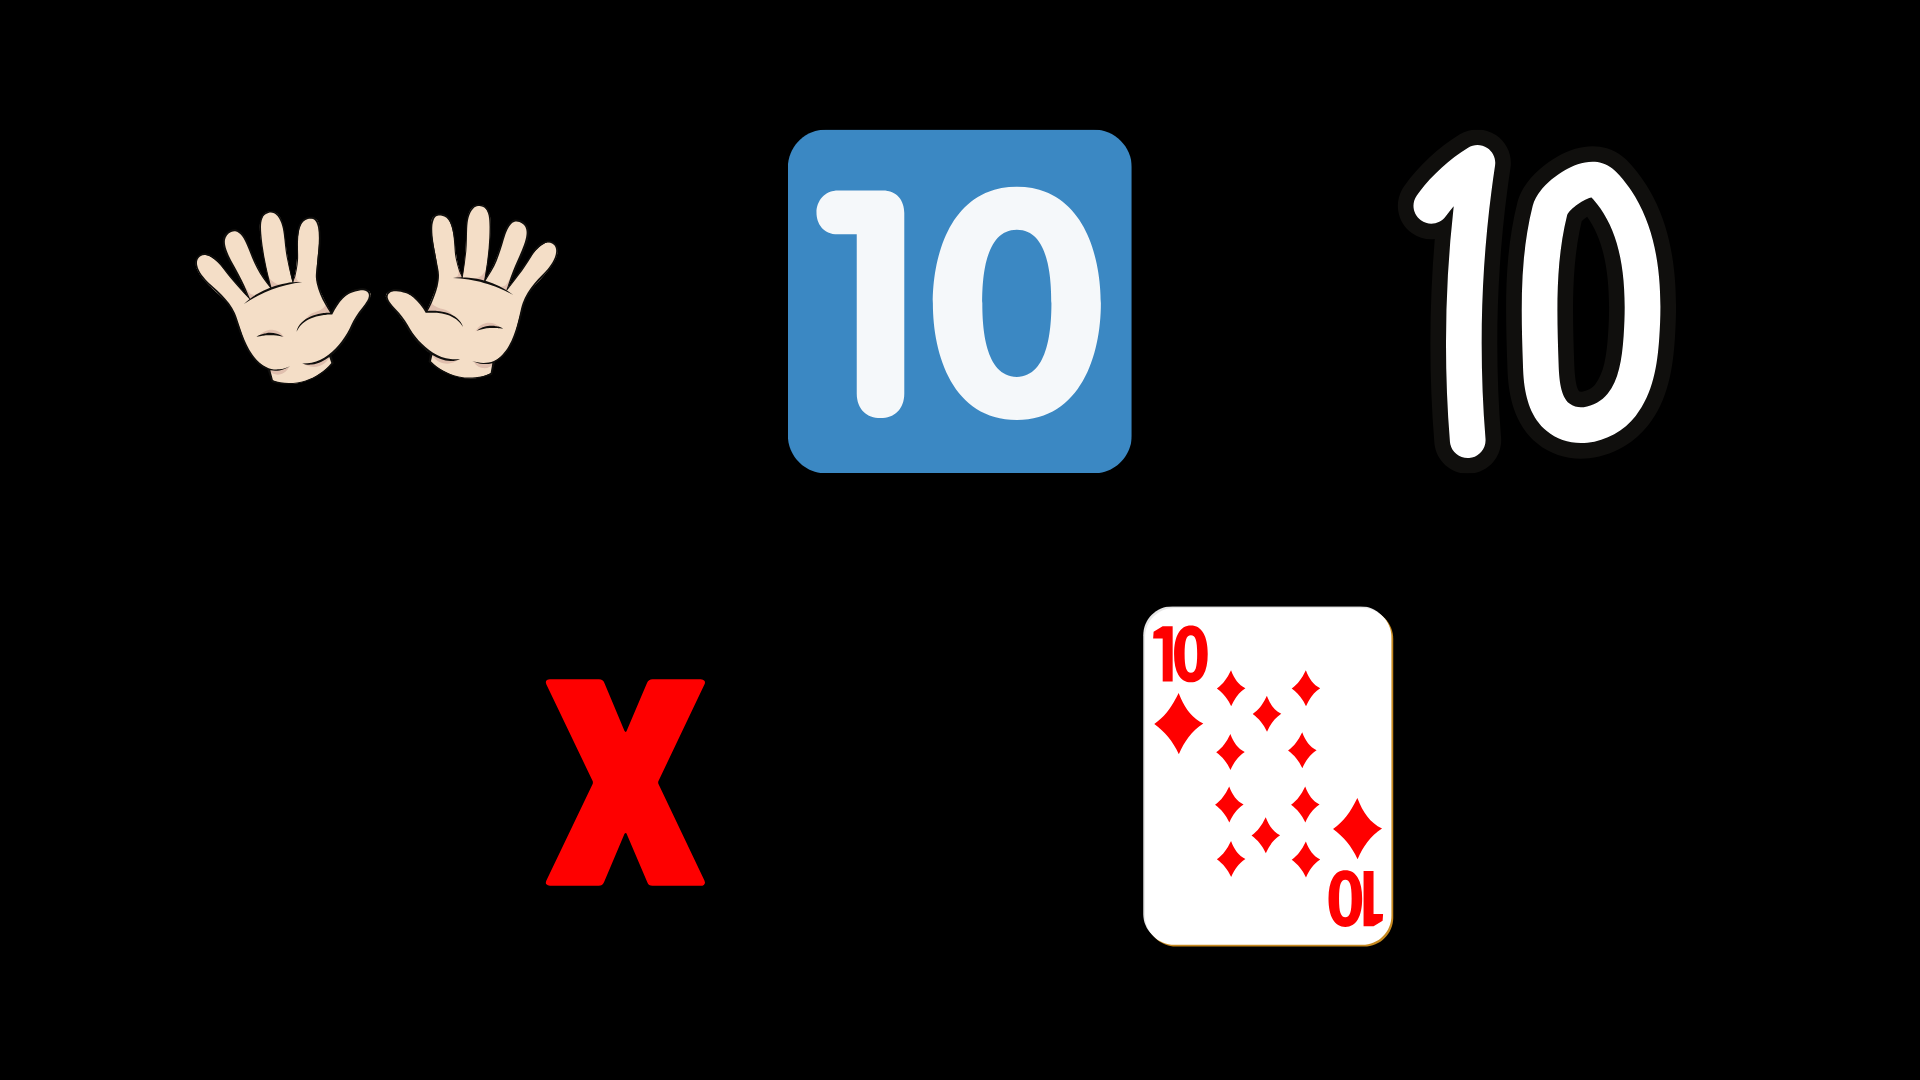 Symbols for 10